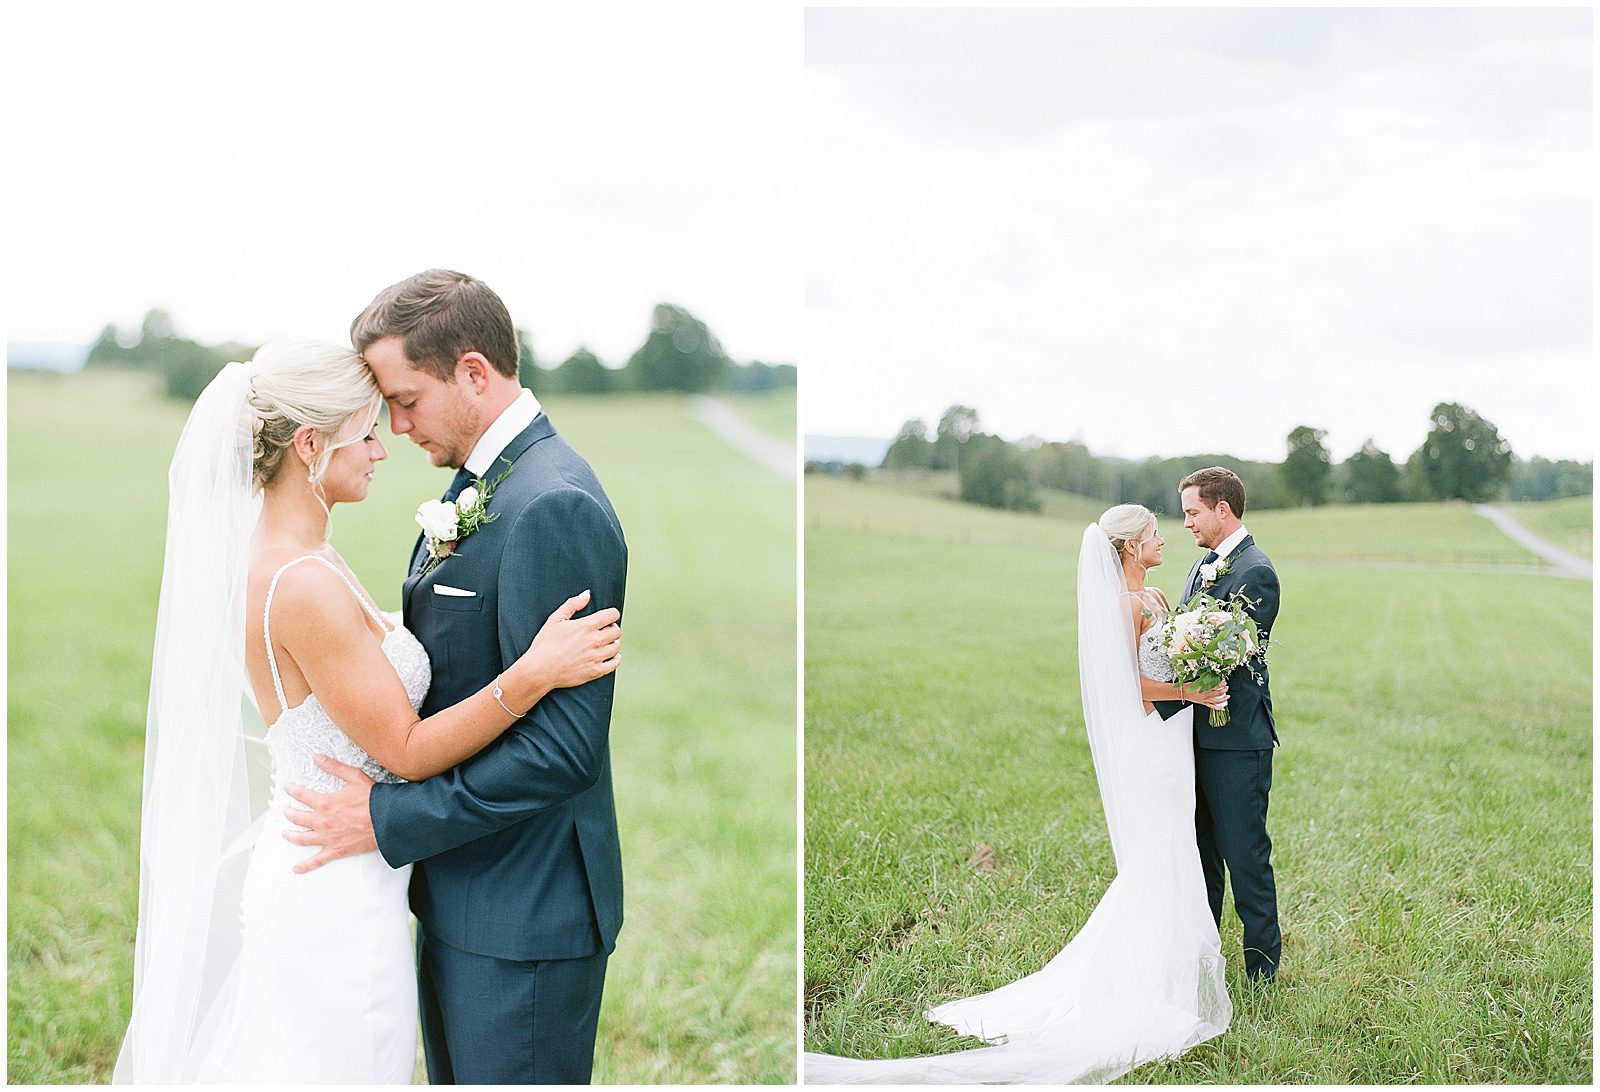 West Virginia Wedding Photographer Captures Bride and Groom in Field Photos